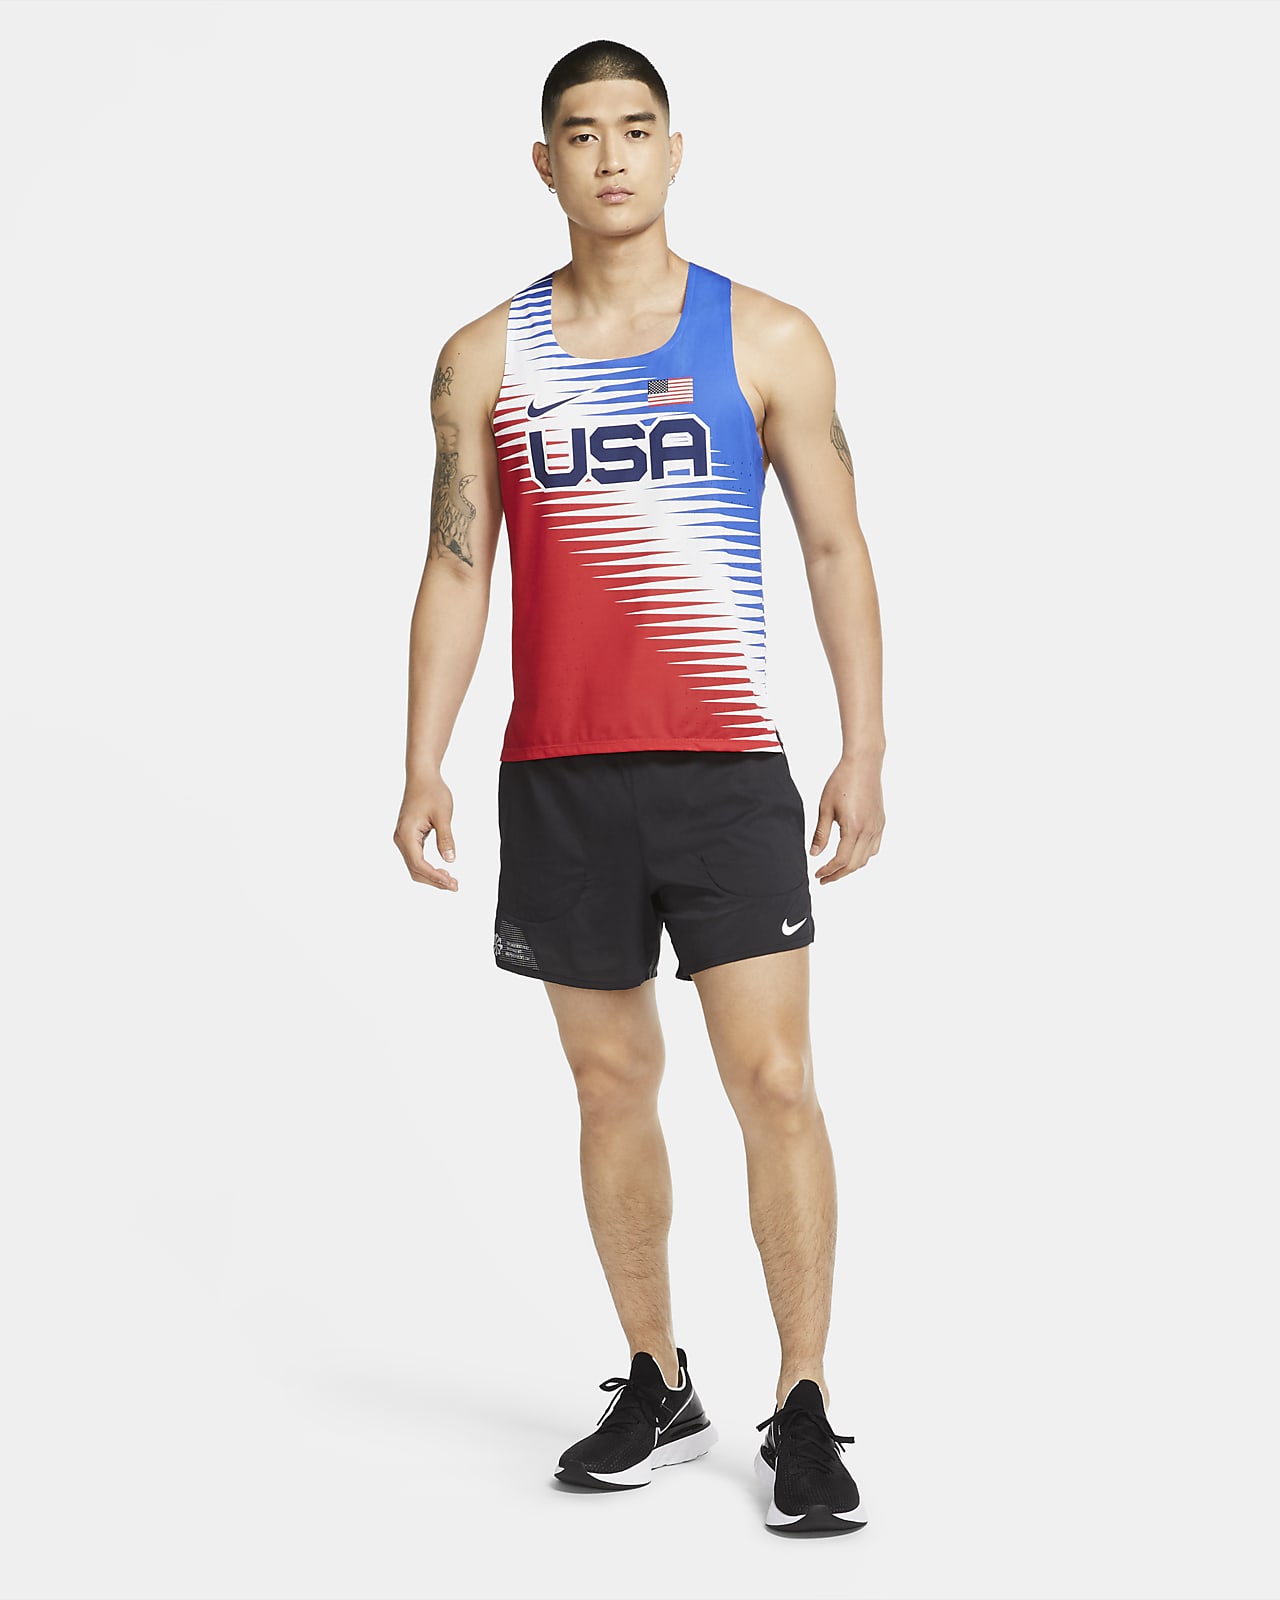 Nike Dri-FIT ADV Team USA AeroSwift Men's Running Singlet. Nike HR